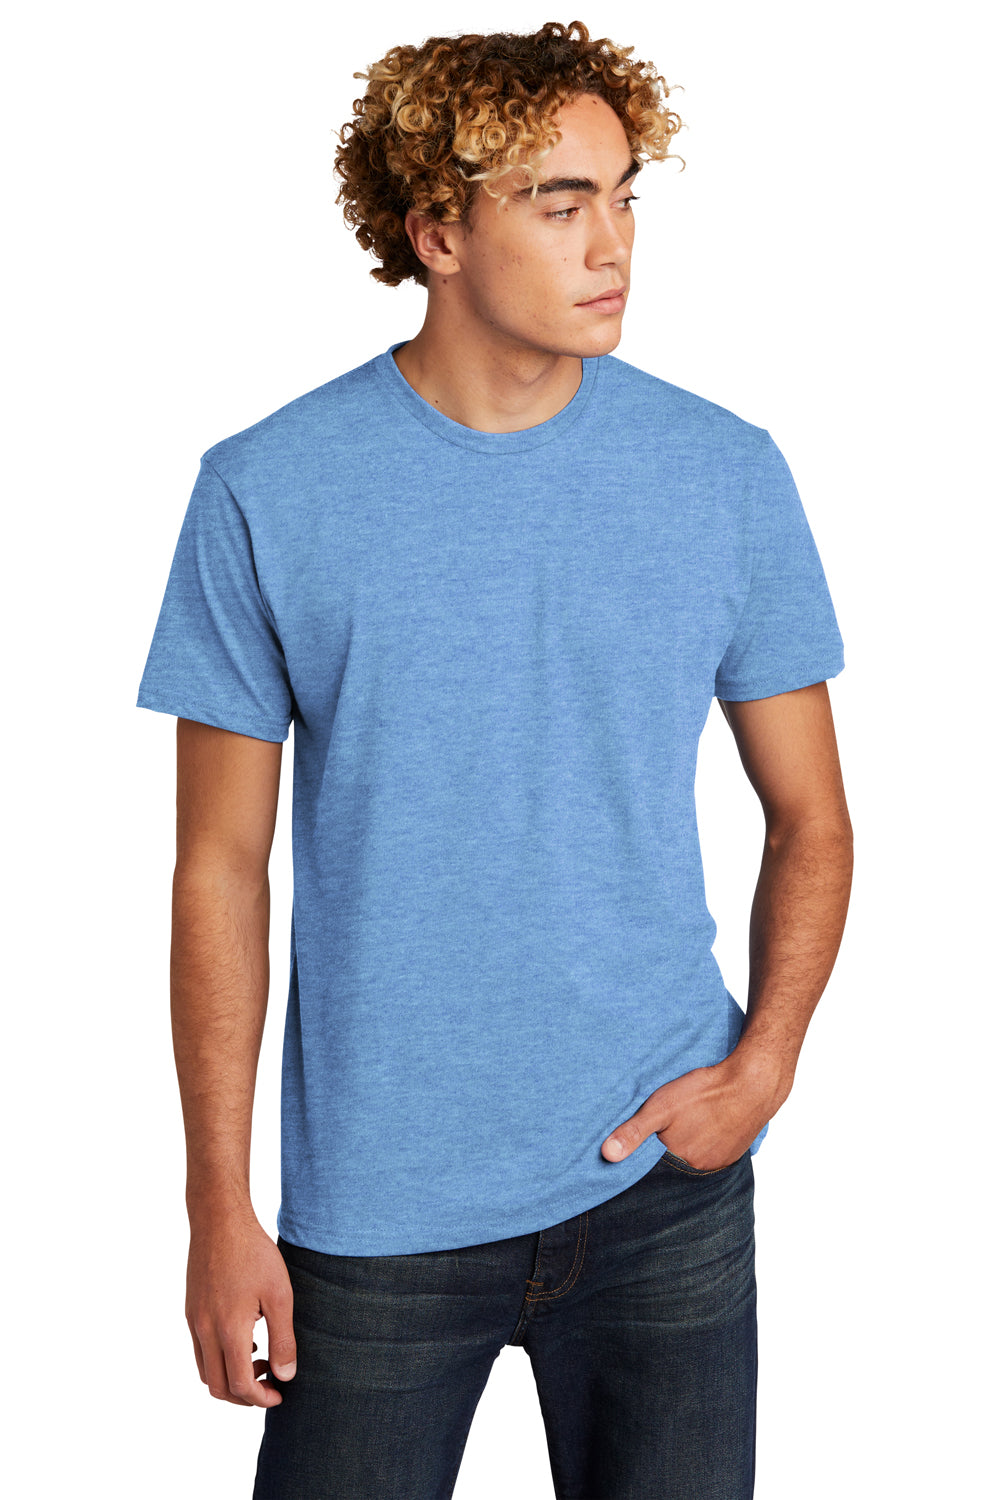 Next Level NL6210/N6210/6210 Mens CVC Jersey Short Sleeve Crewneck T-Shirt Heather Columbia Blue Front